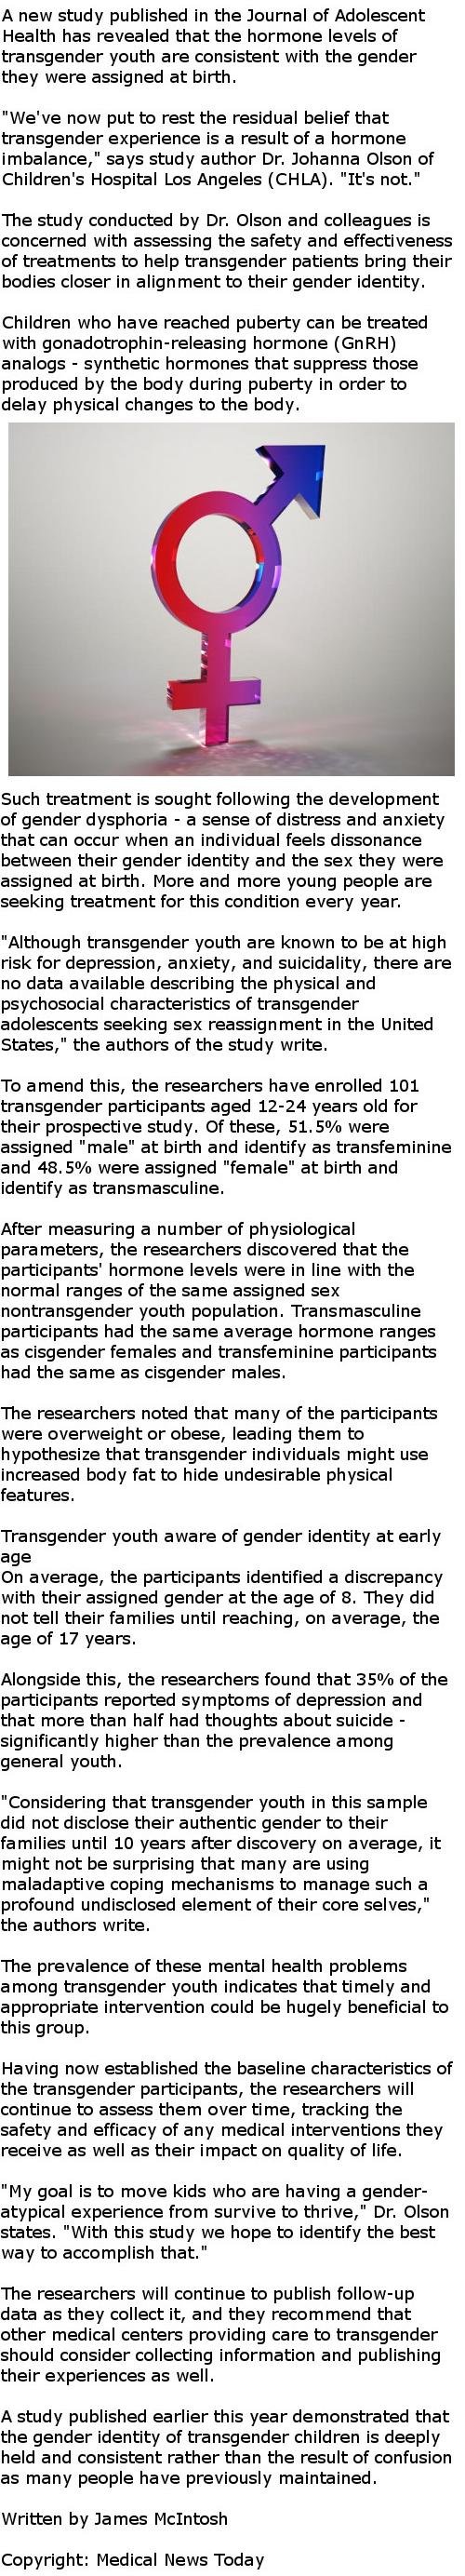 Transgender children do not have hormone imbalance